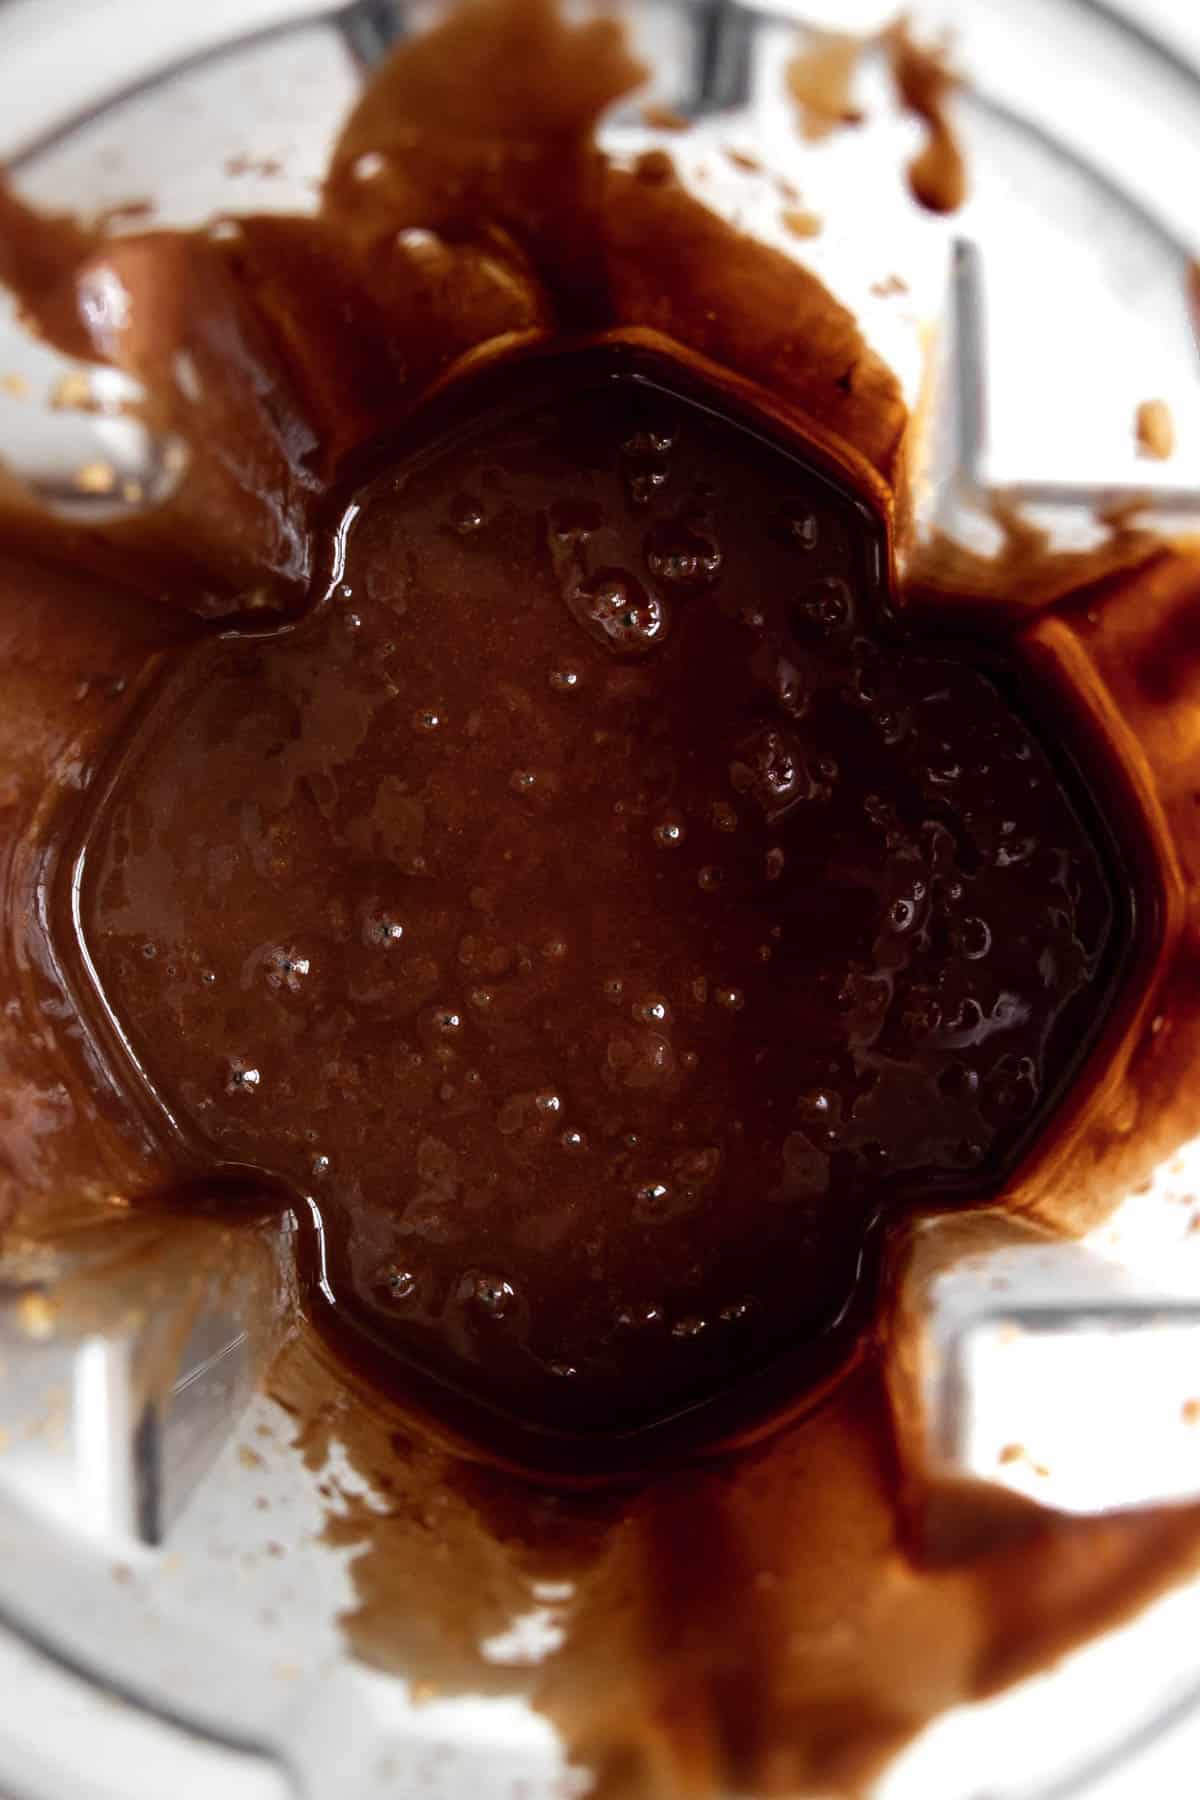 Creamy chocolate hazelnut spread in a blender.